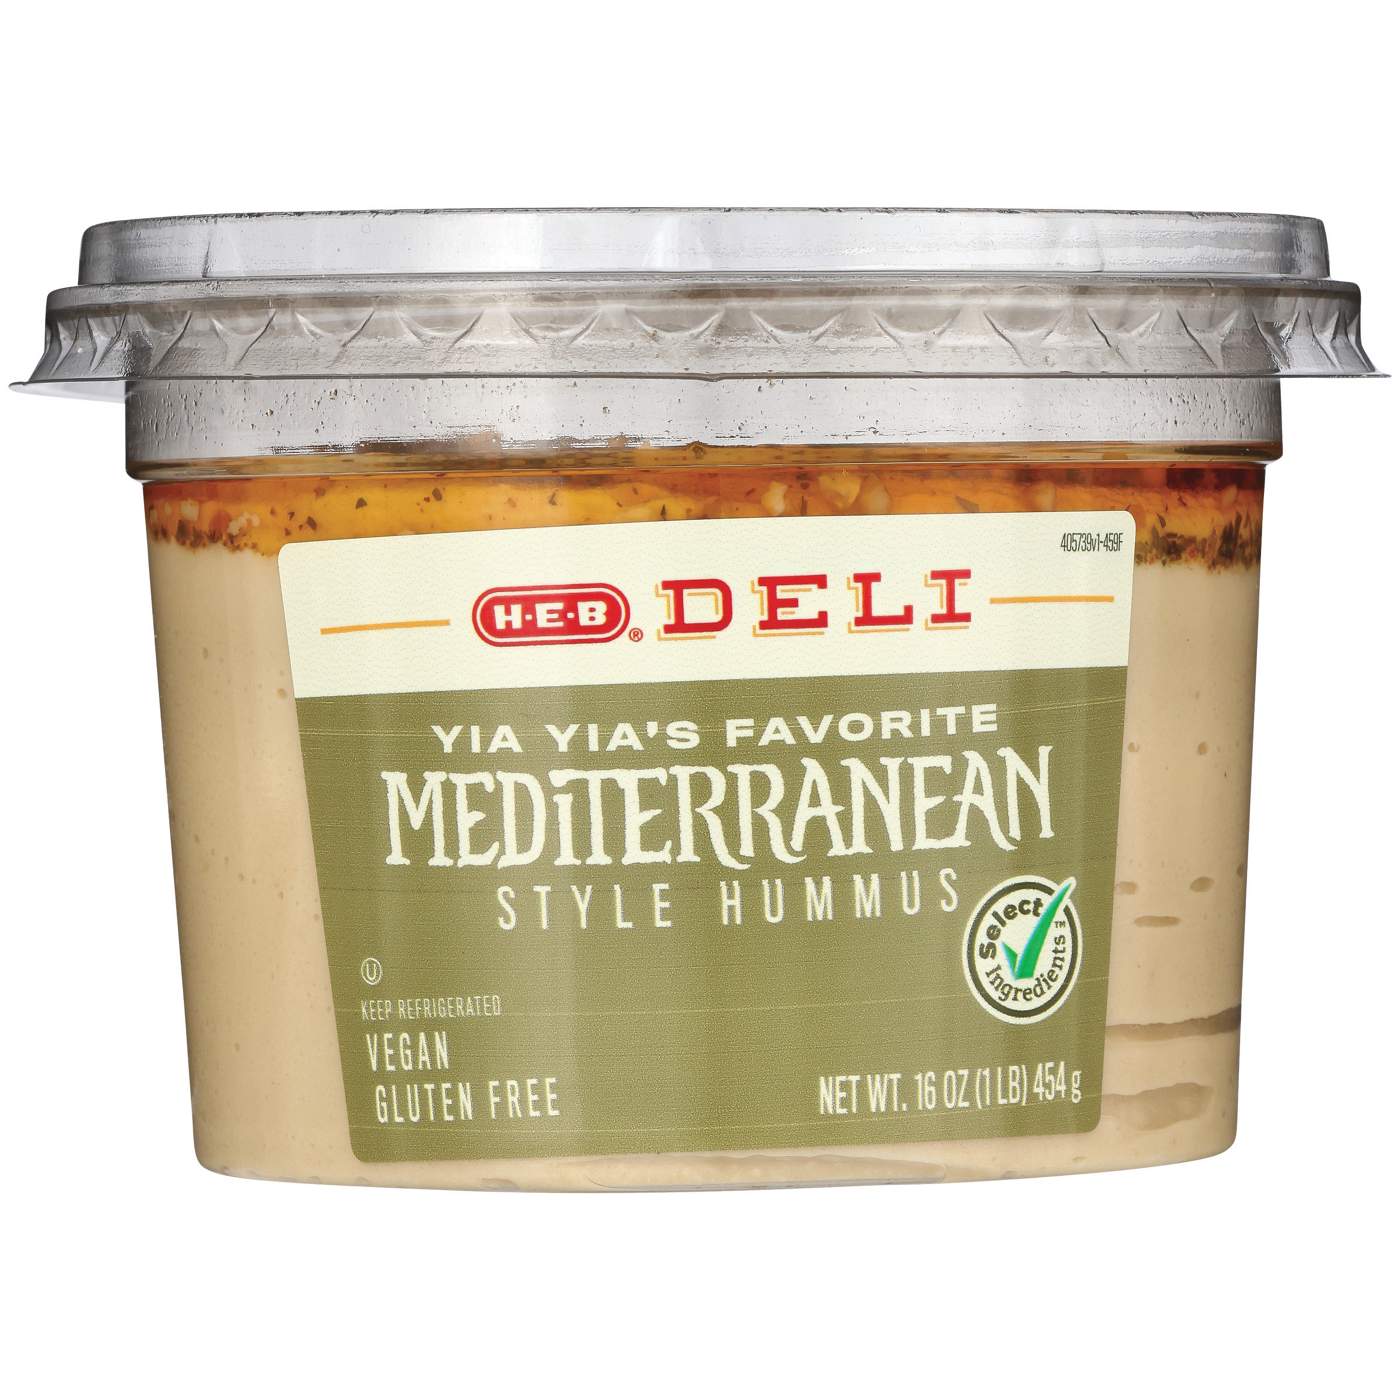 H-E-B Deli Yia Yia’s Favorite Mediterranean-Style Hummus; image 2 of 3